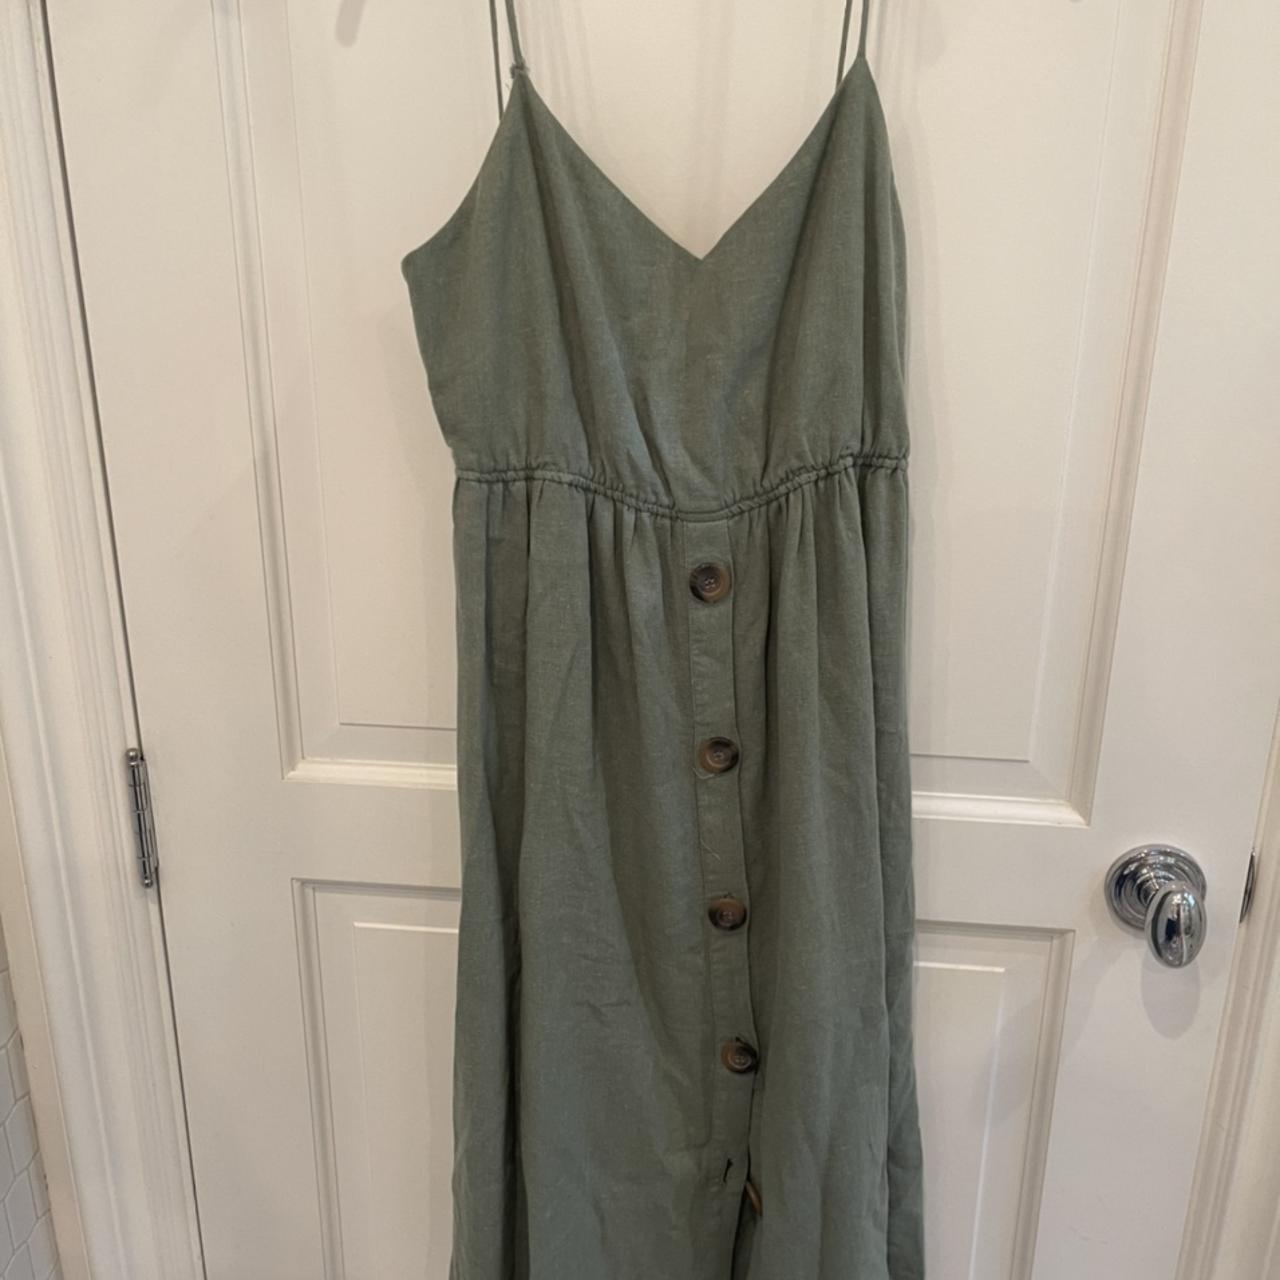 Zara Olive Green linen maxi dress with light and... - Depop